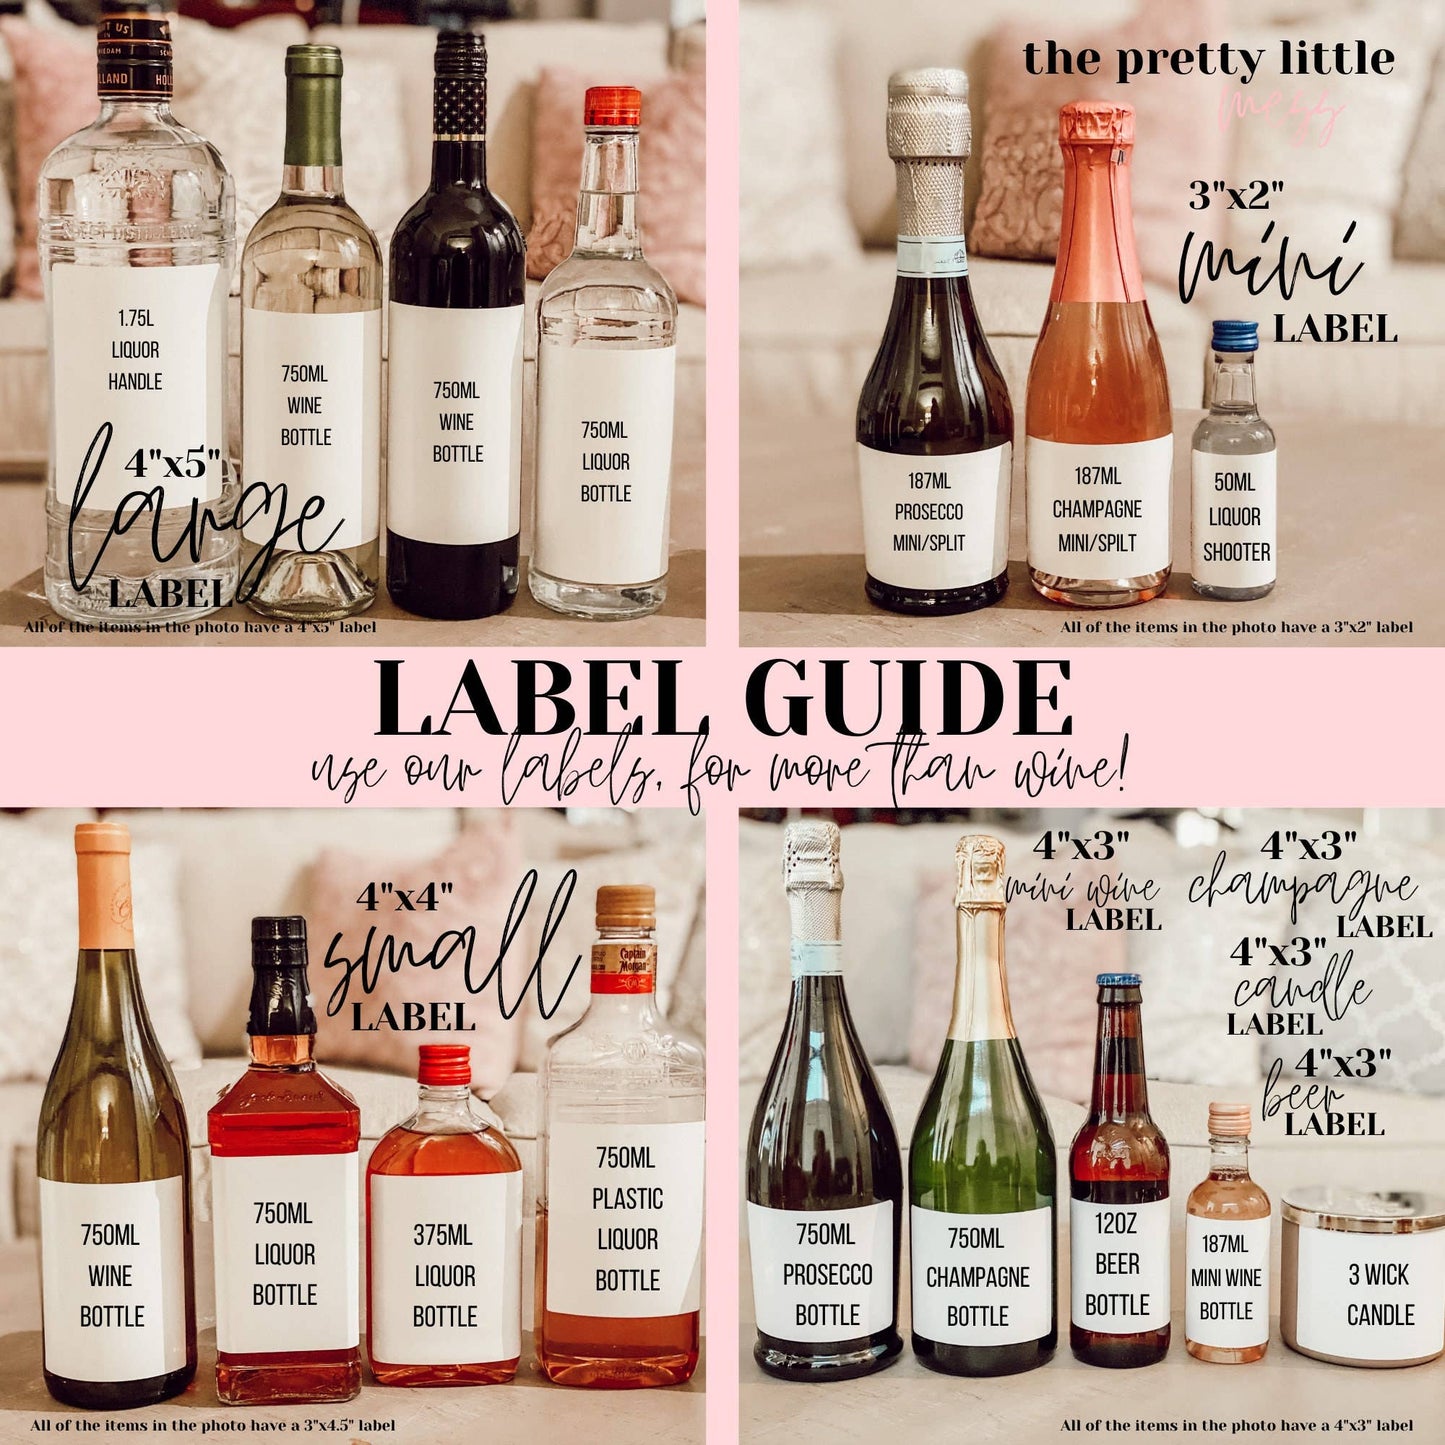 Bottle Labels: "Listed/Sold" (Multiple Sizes)